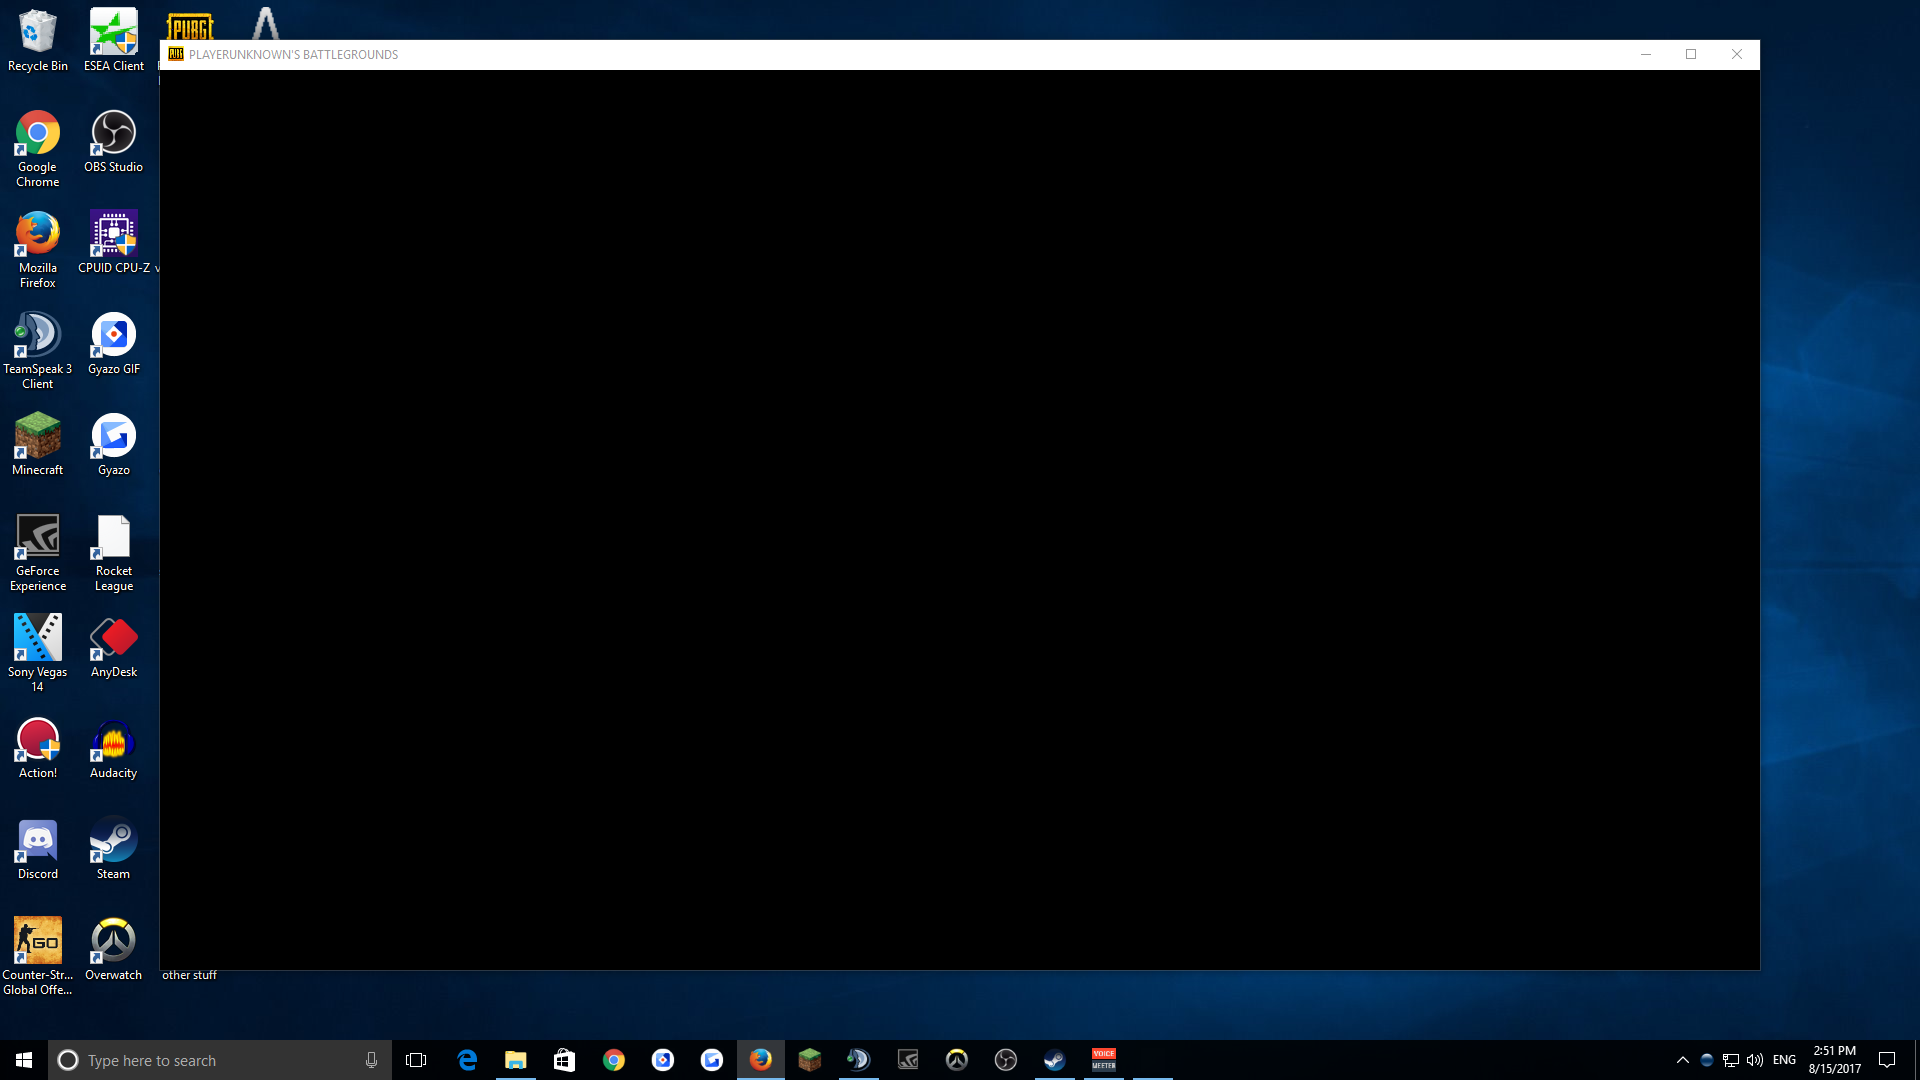 anydesk black screen windows 10